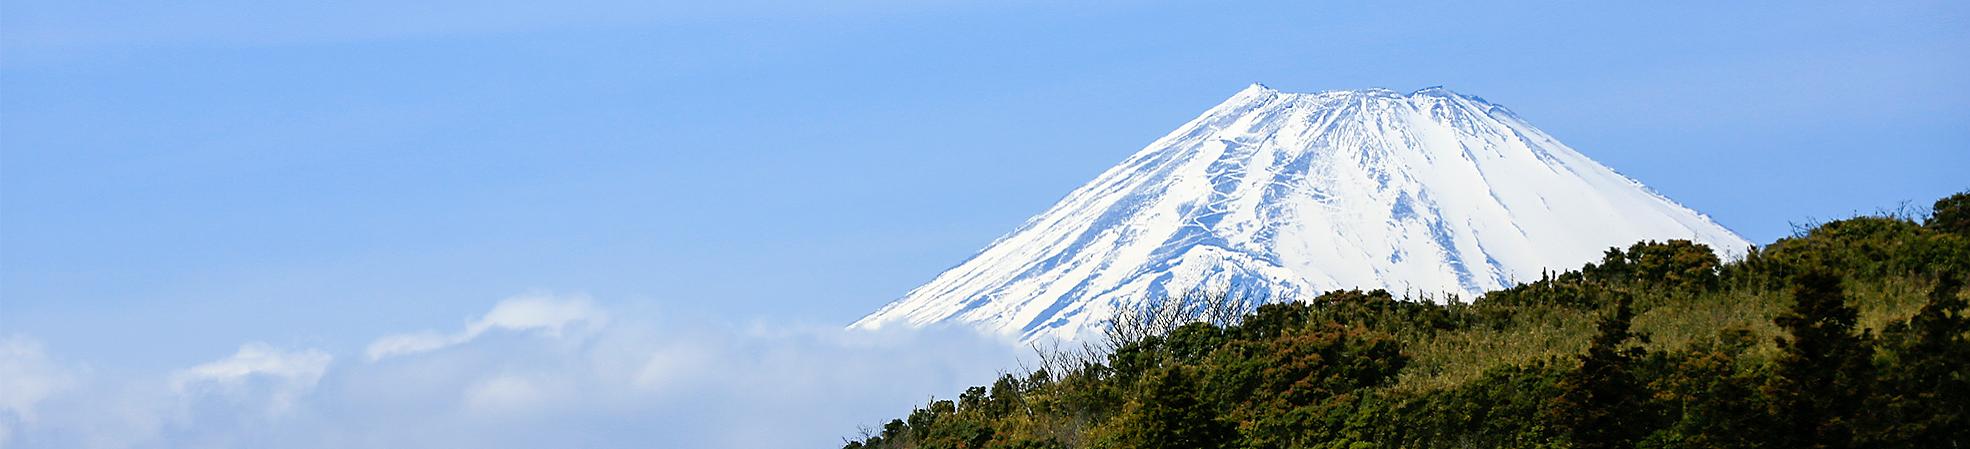 Mount Fuji Travel Guide